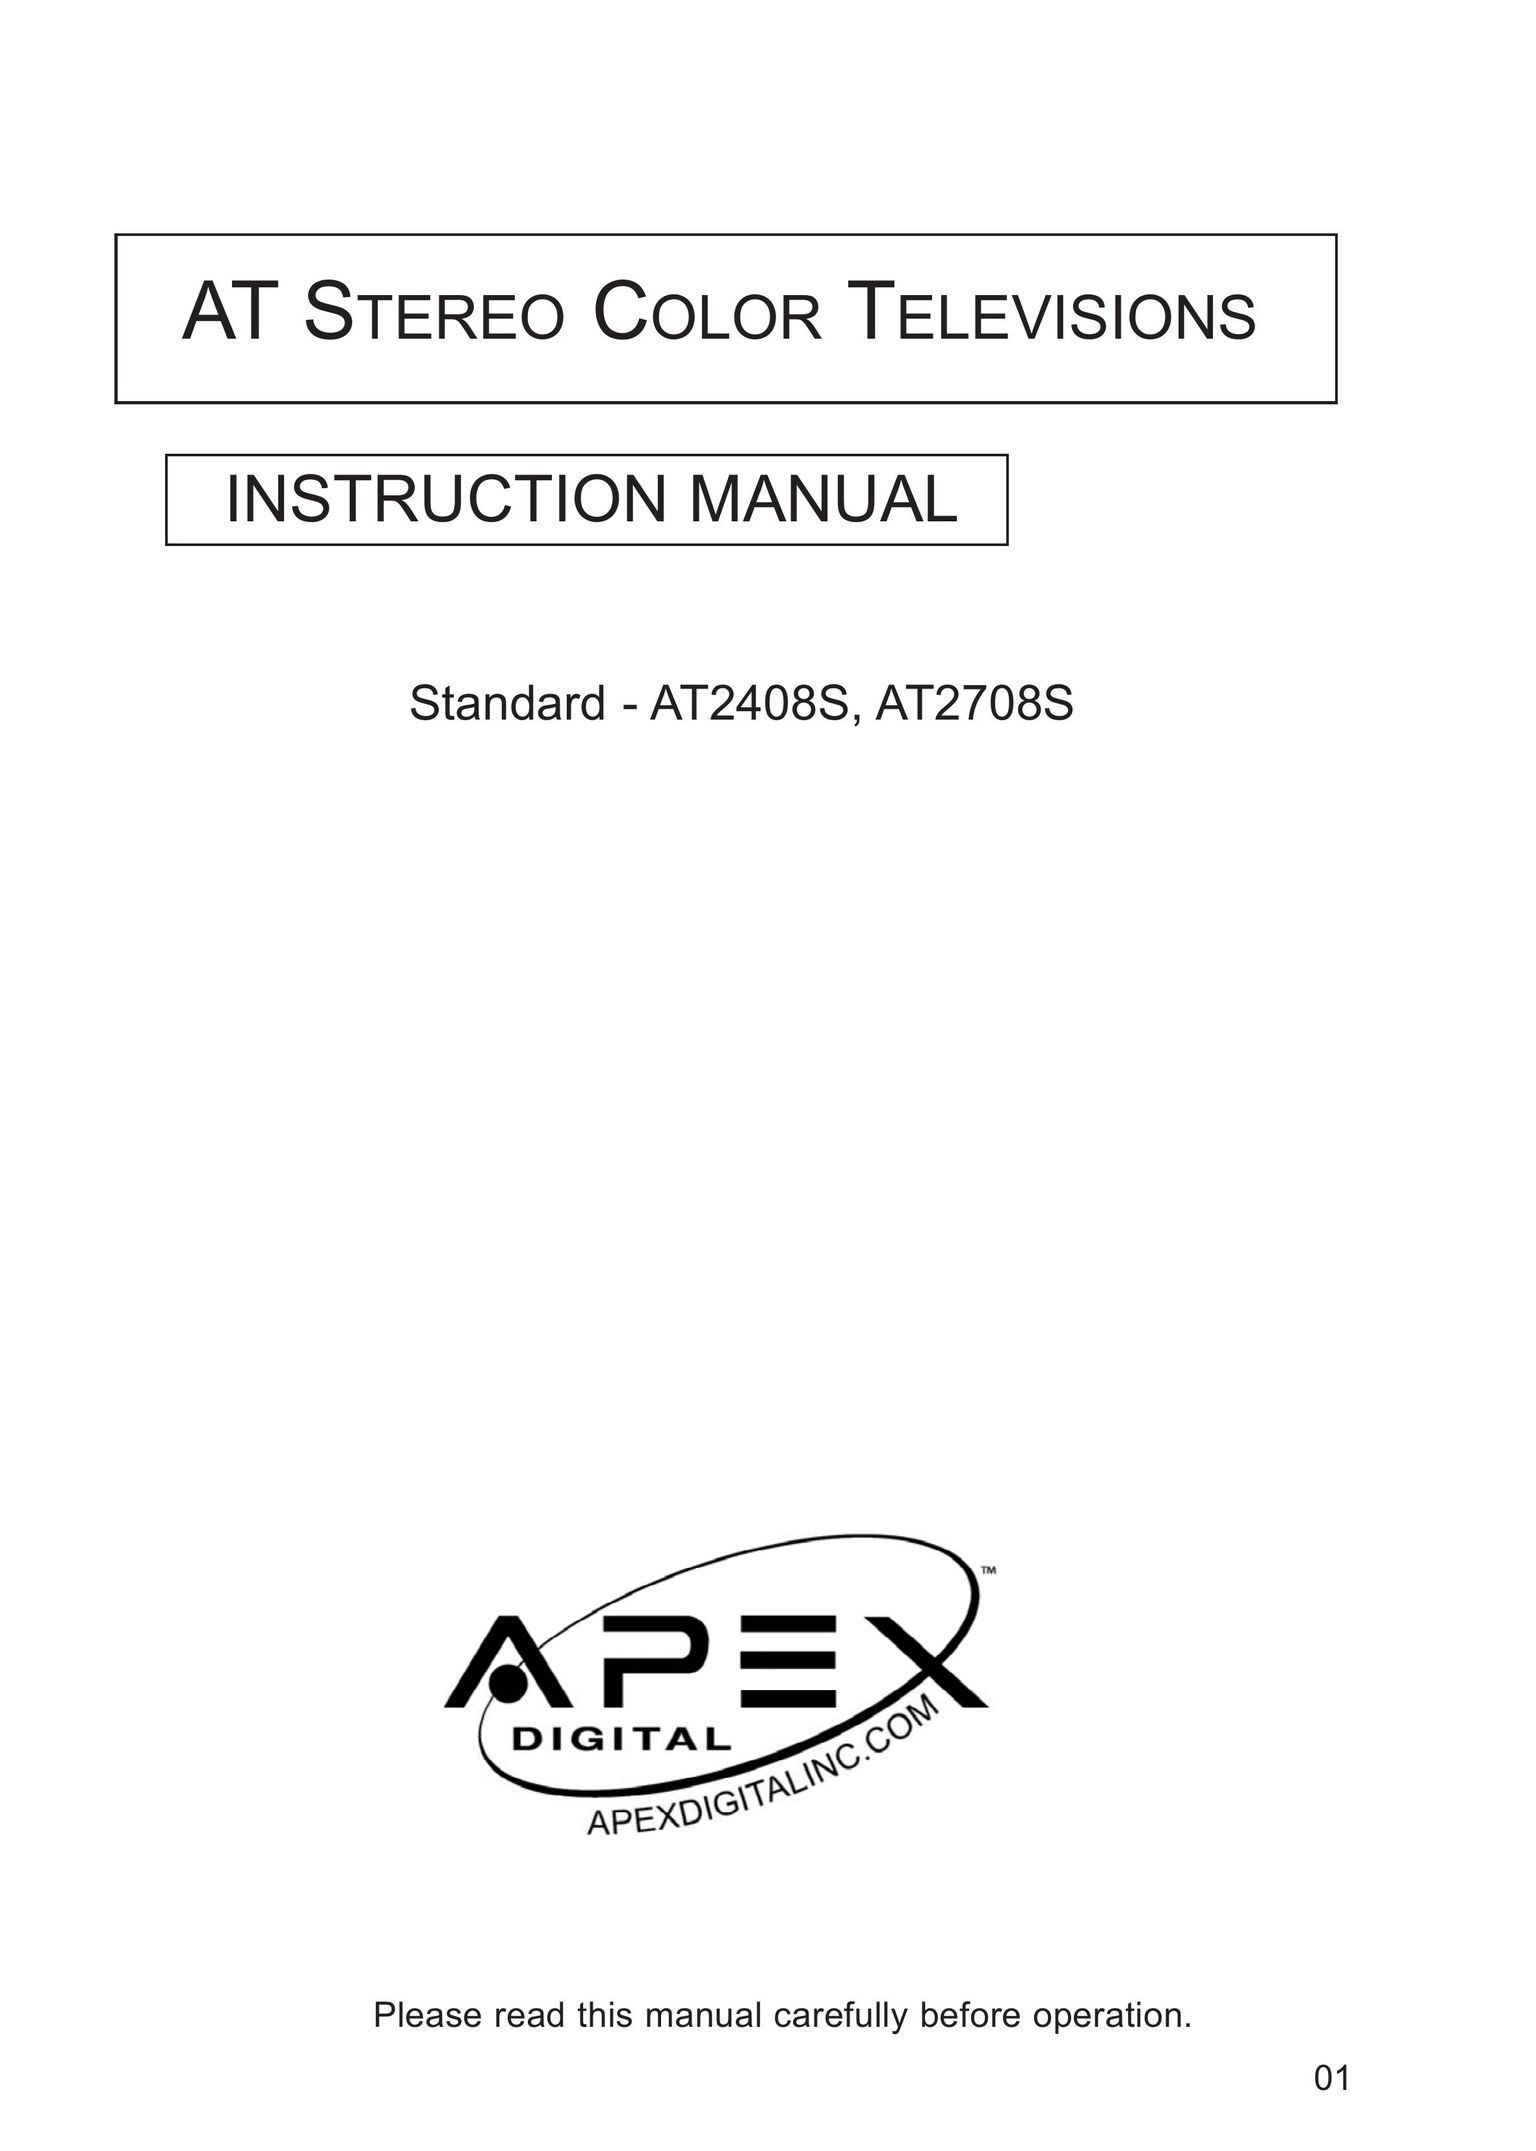 Apex Digital AT2408S, AT2708S CRT Television User Manual